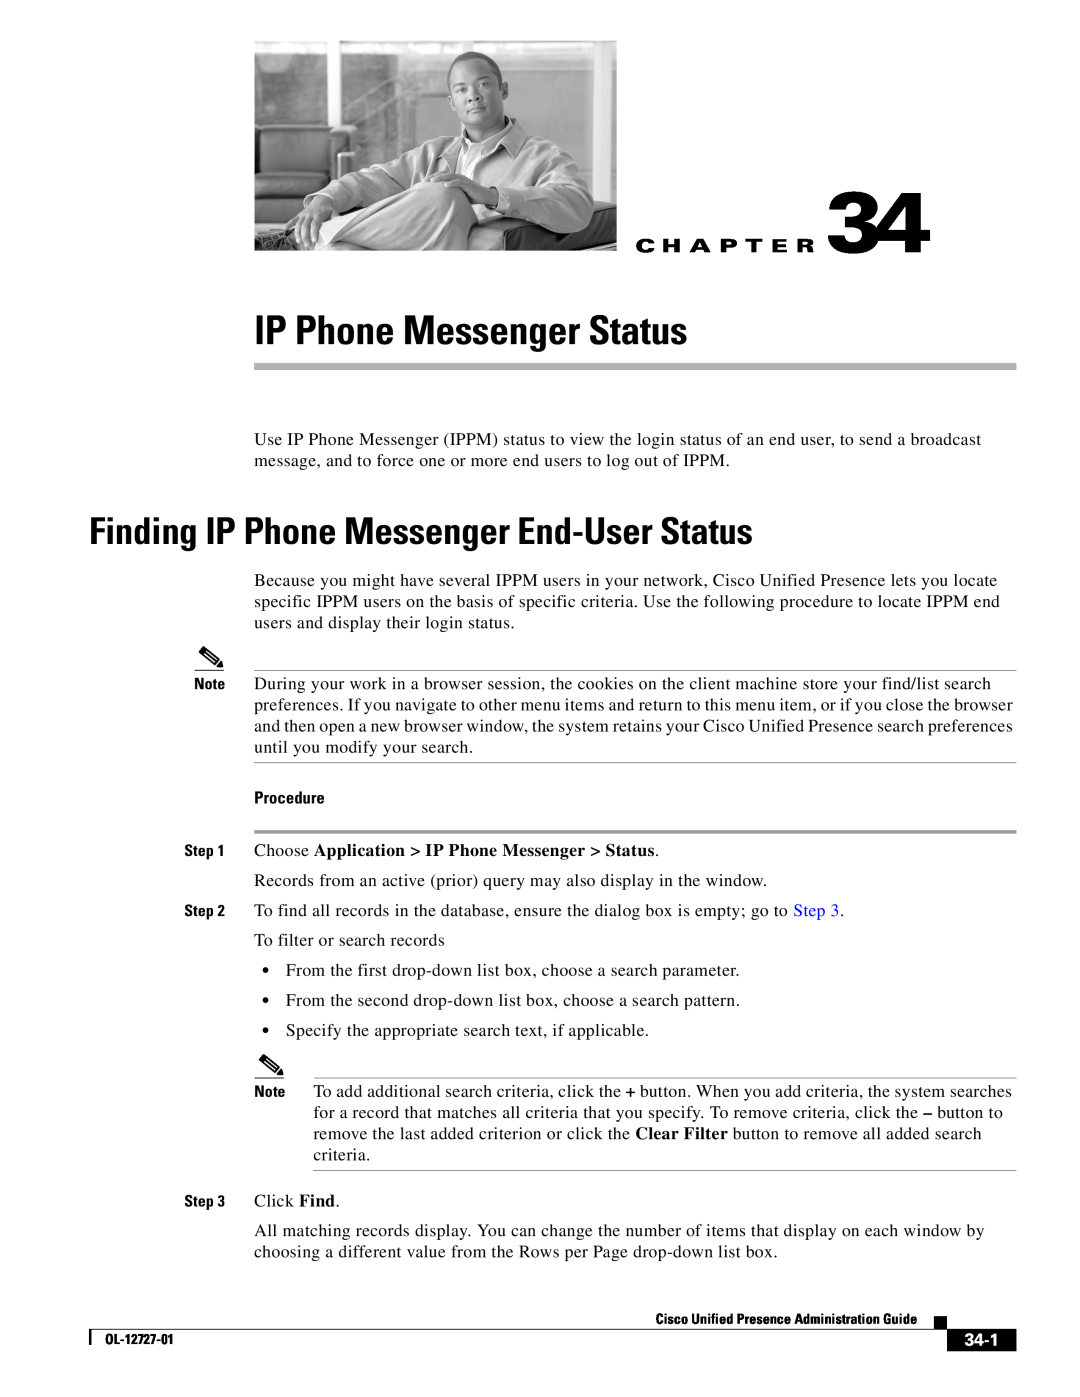 Cisco Systems OL-12727-01 manual Finding IP Phone Messenger End-User Status, Procedure, 34-1, IP Phone Messenger Status 